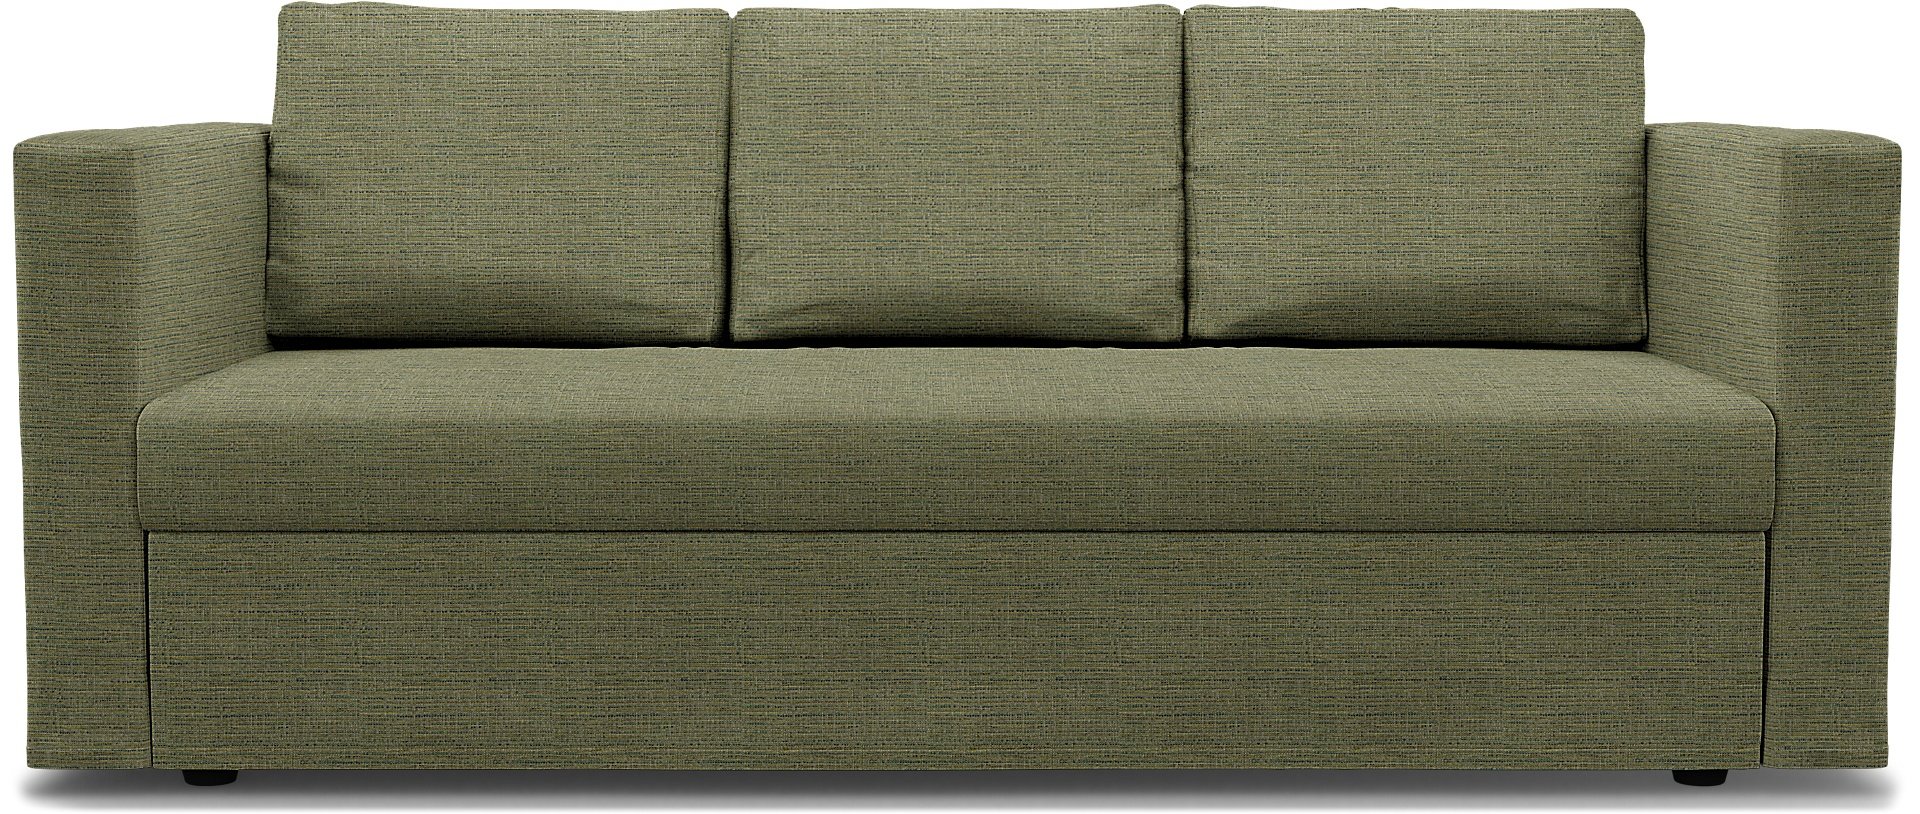 IKEA - Friheten 3 Seater Sofa Bed Cover, Meadow Green, Boucle & Texture - Bemz